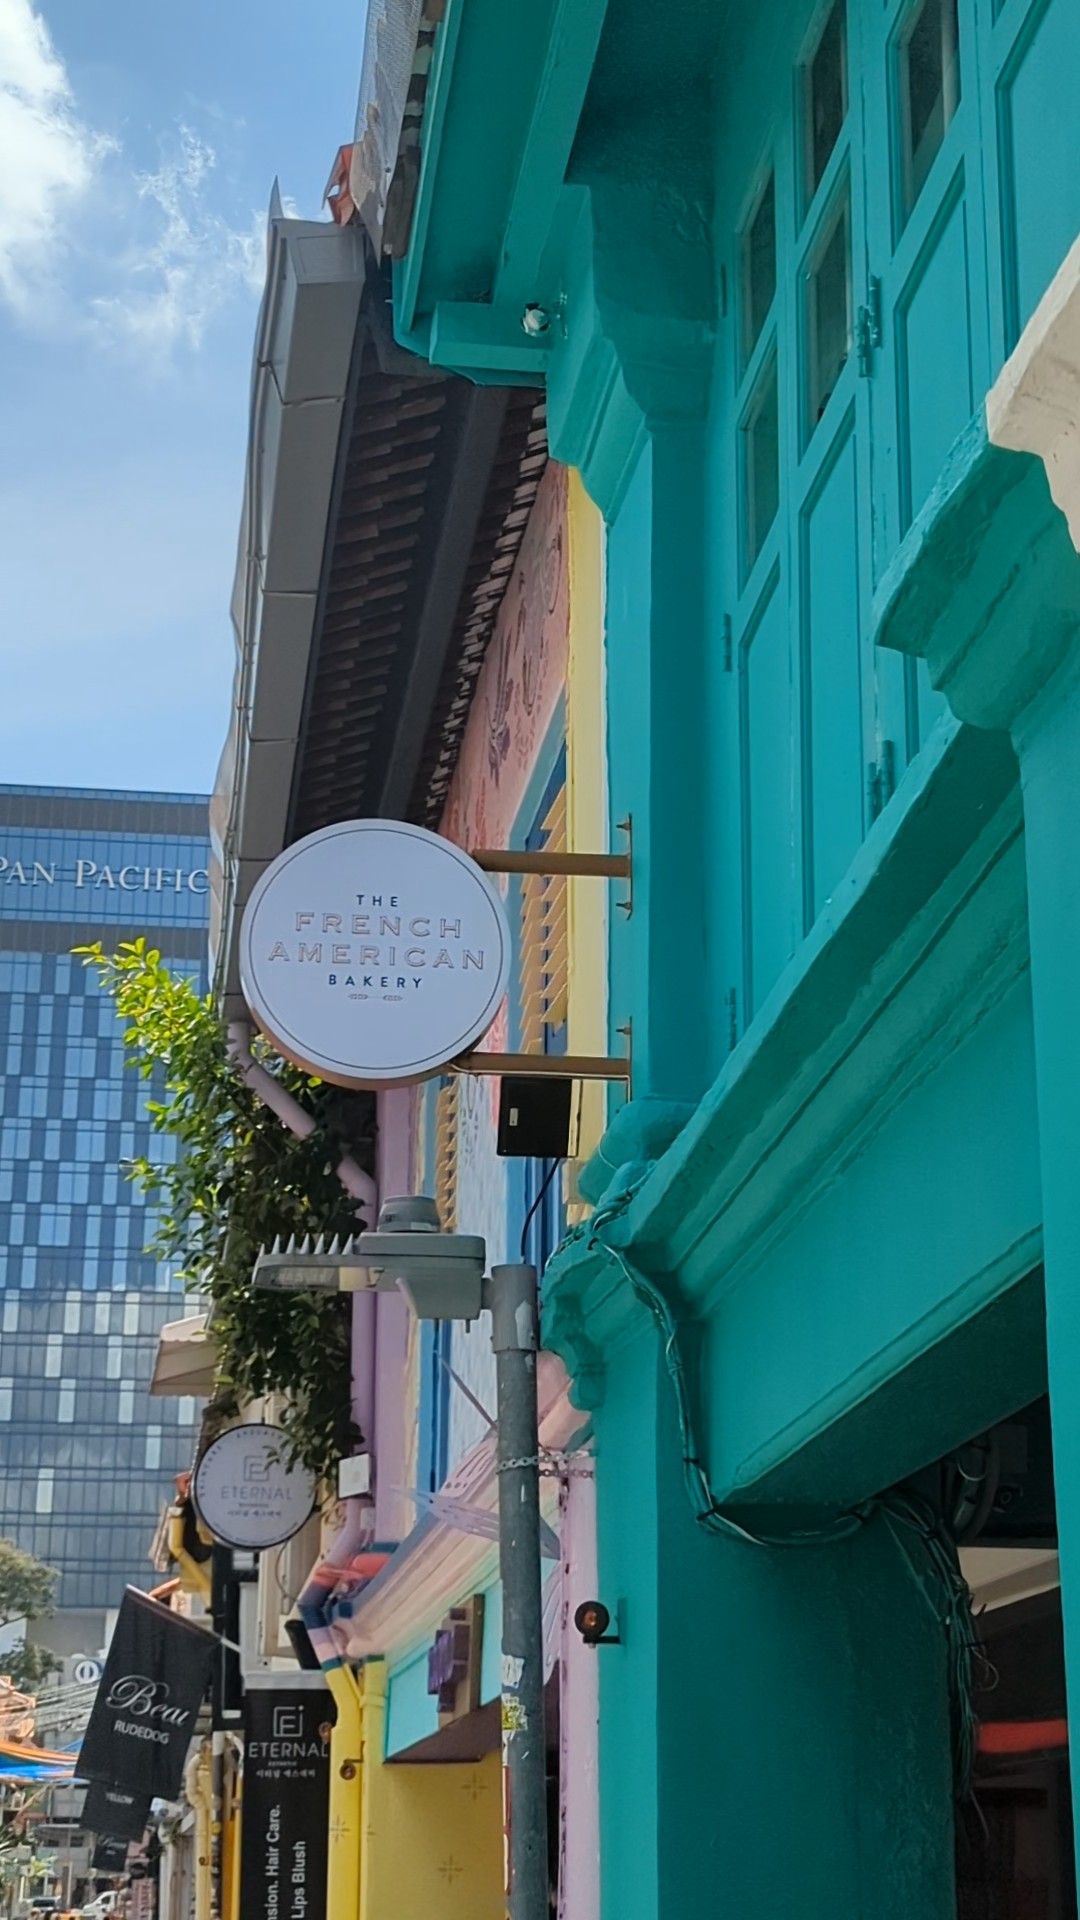 The French American Bakery, Haji Lane, Singapore